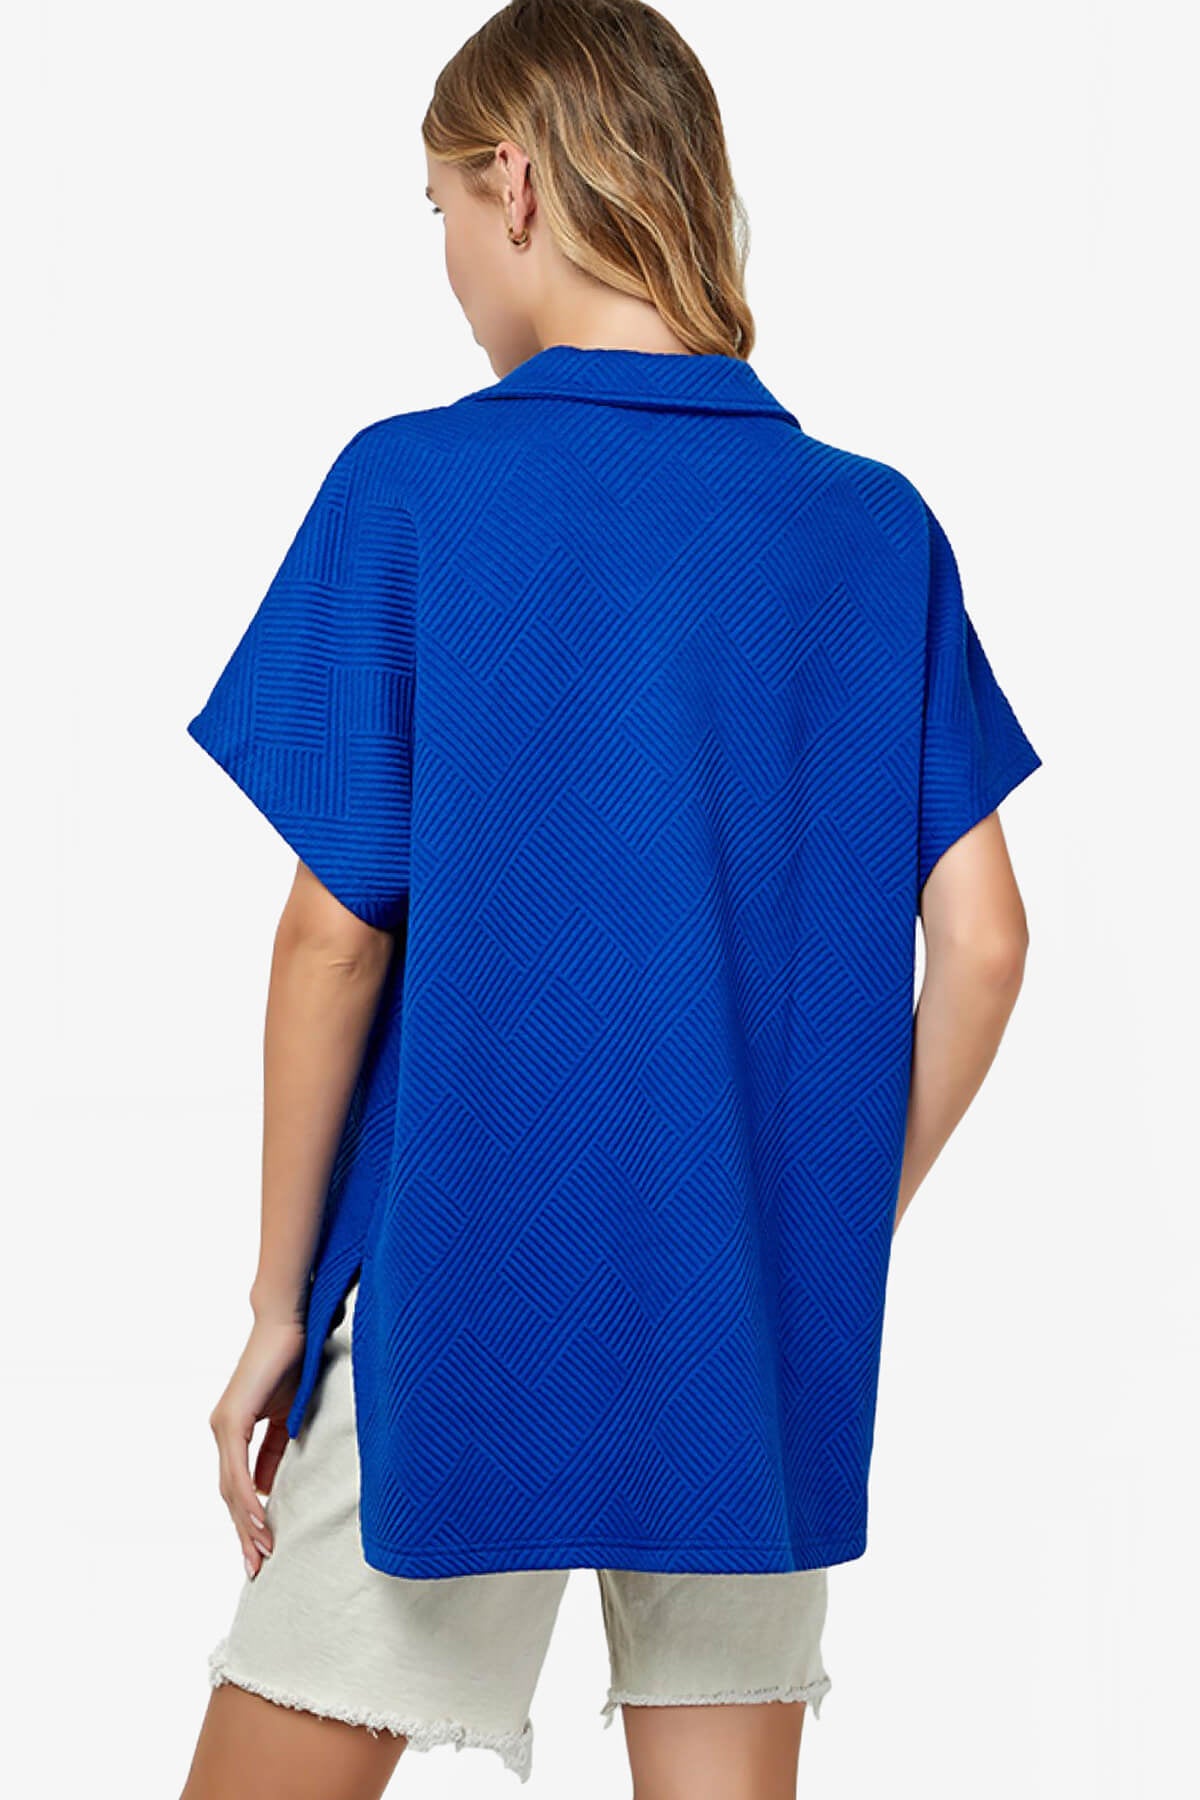 Lassy Short Sleeve Textured Polo Sweatshirt ROYAL BLUE_2